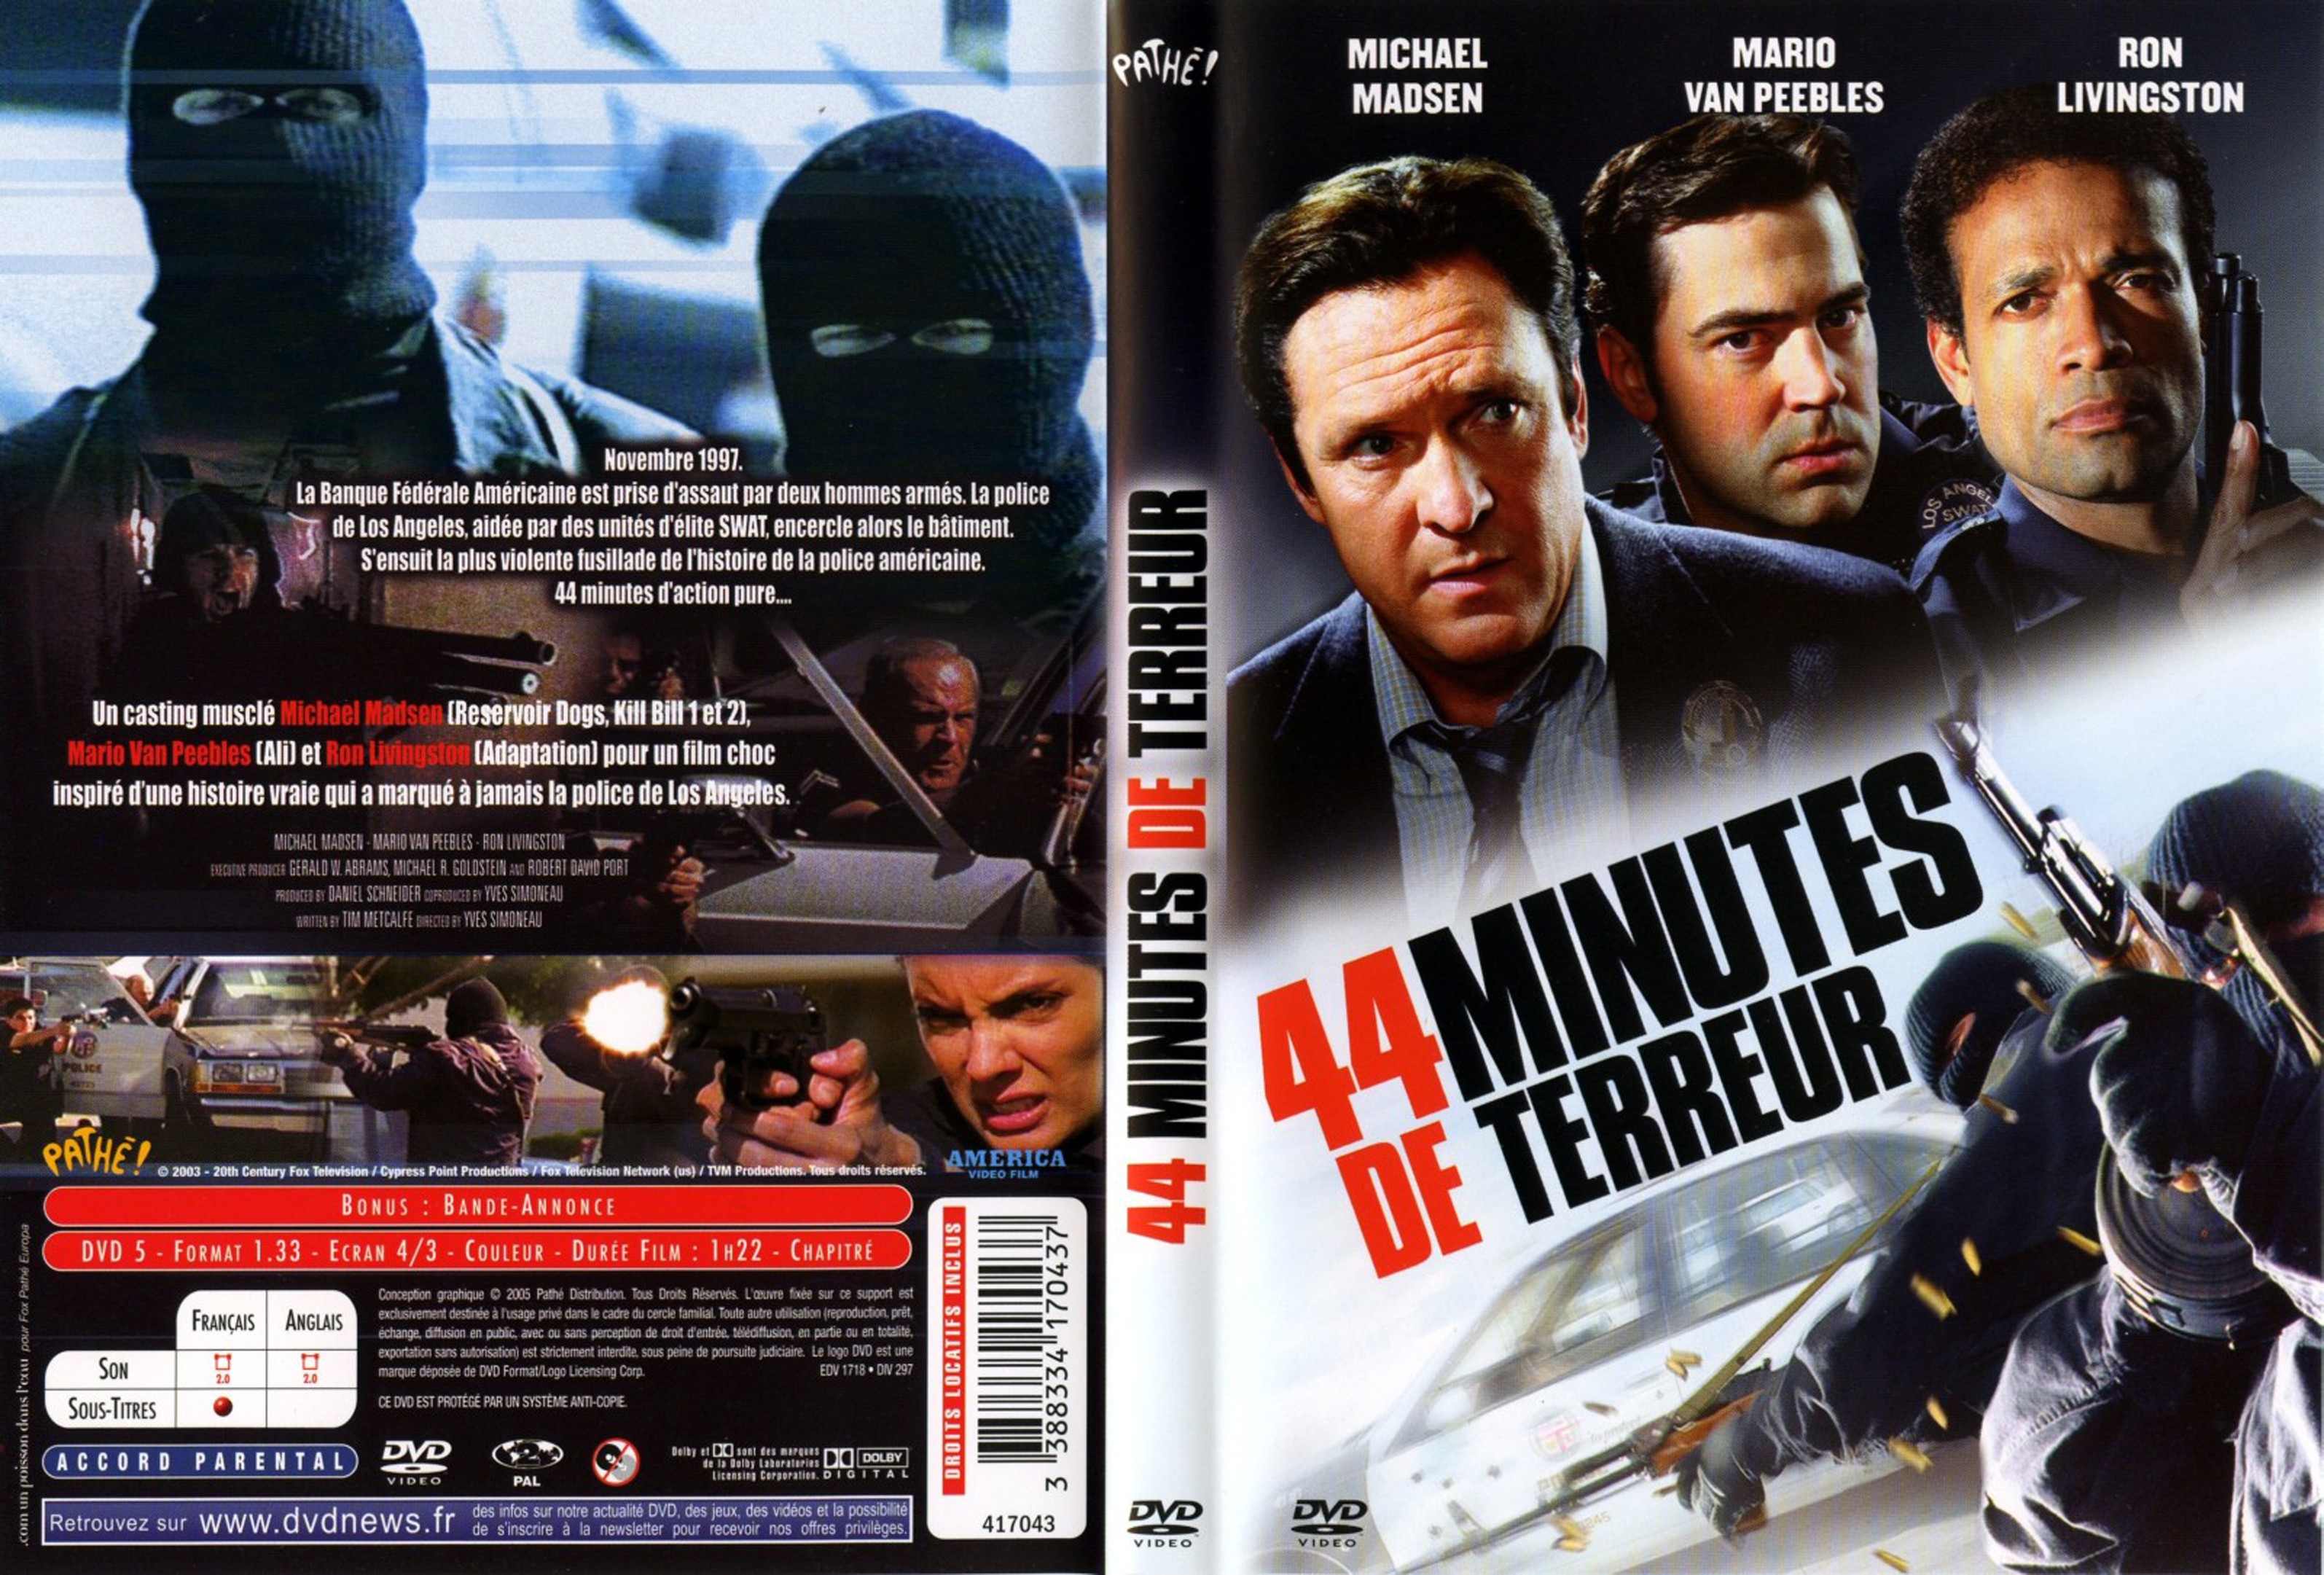 Jaquette DVD 44 minutes de terreur